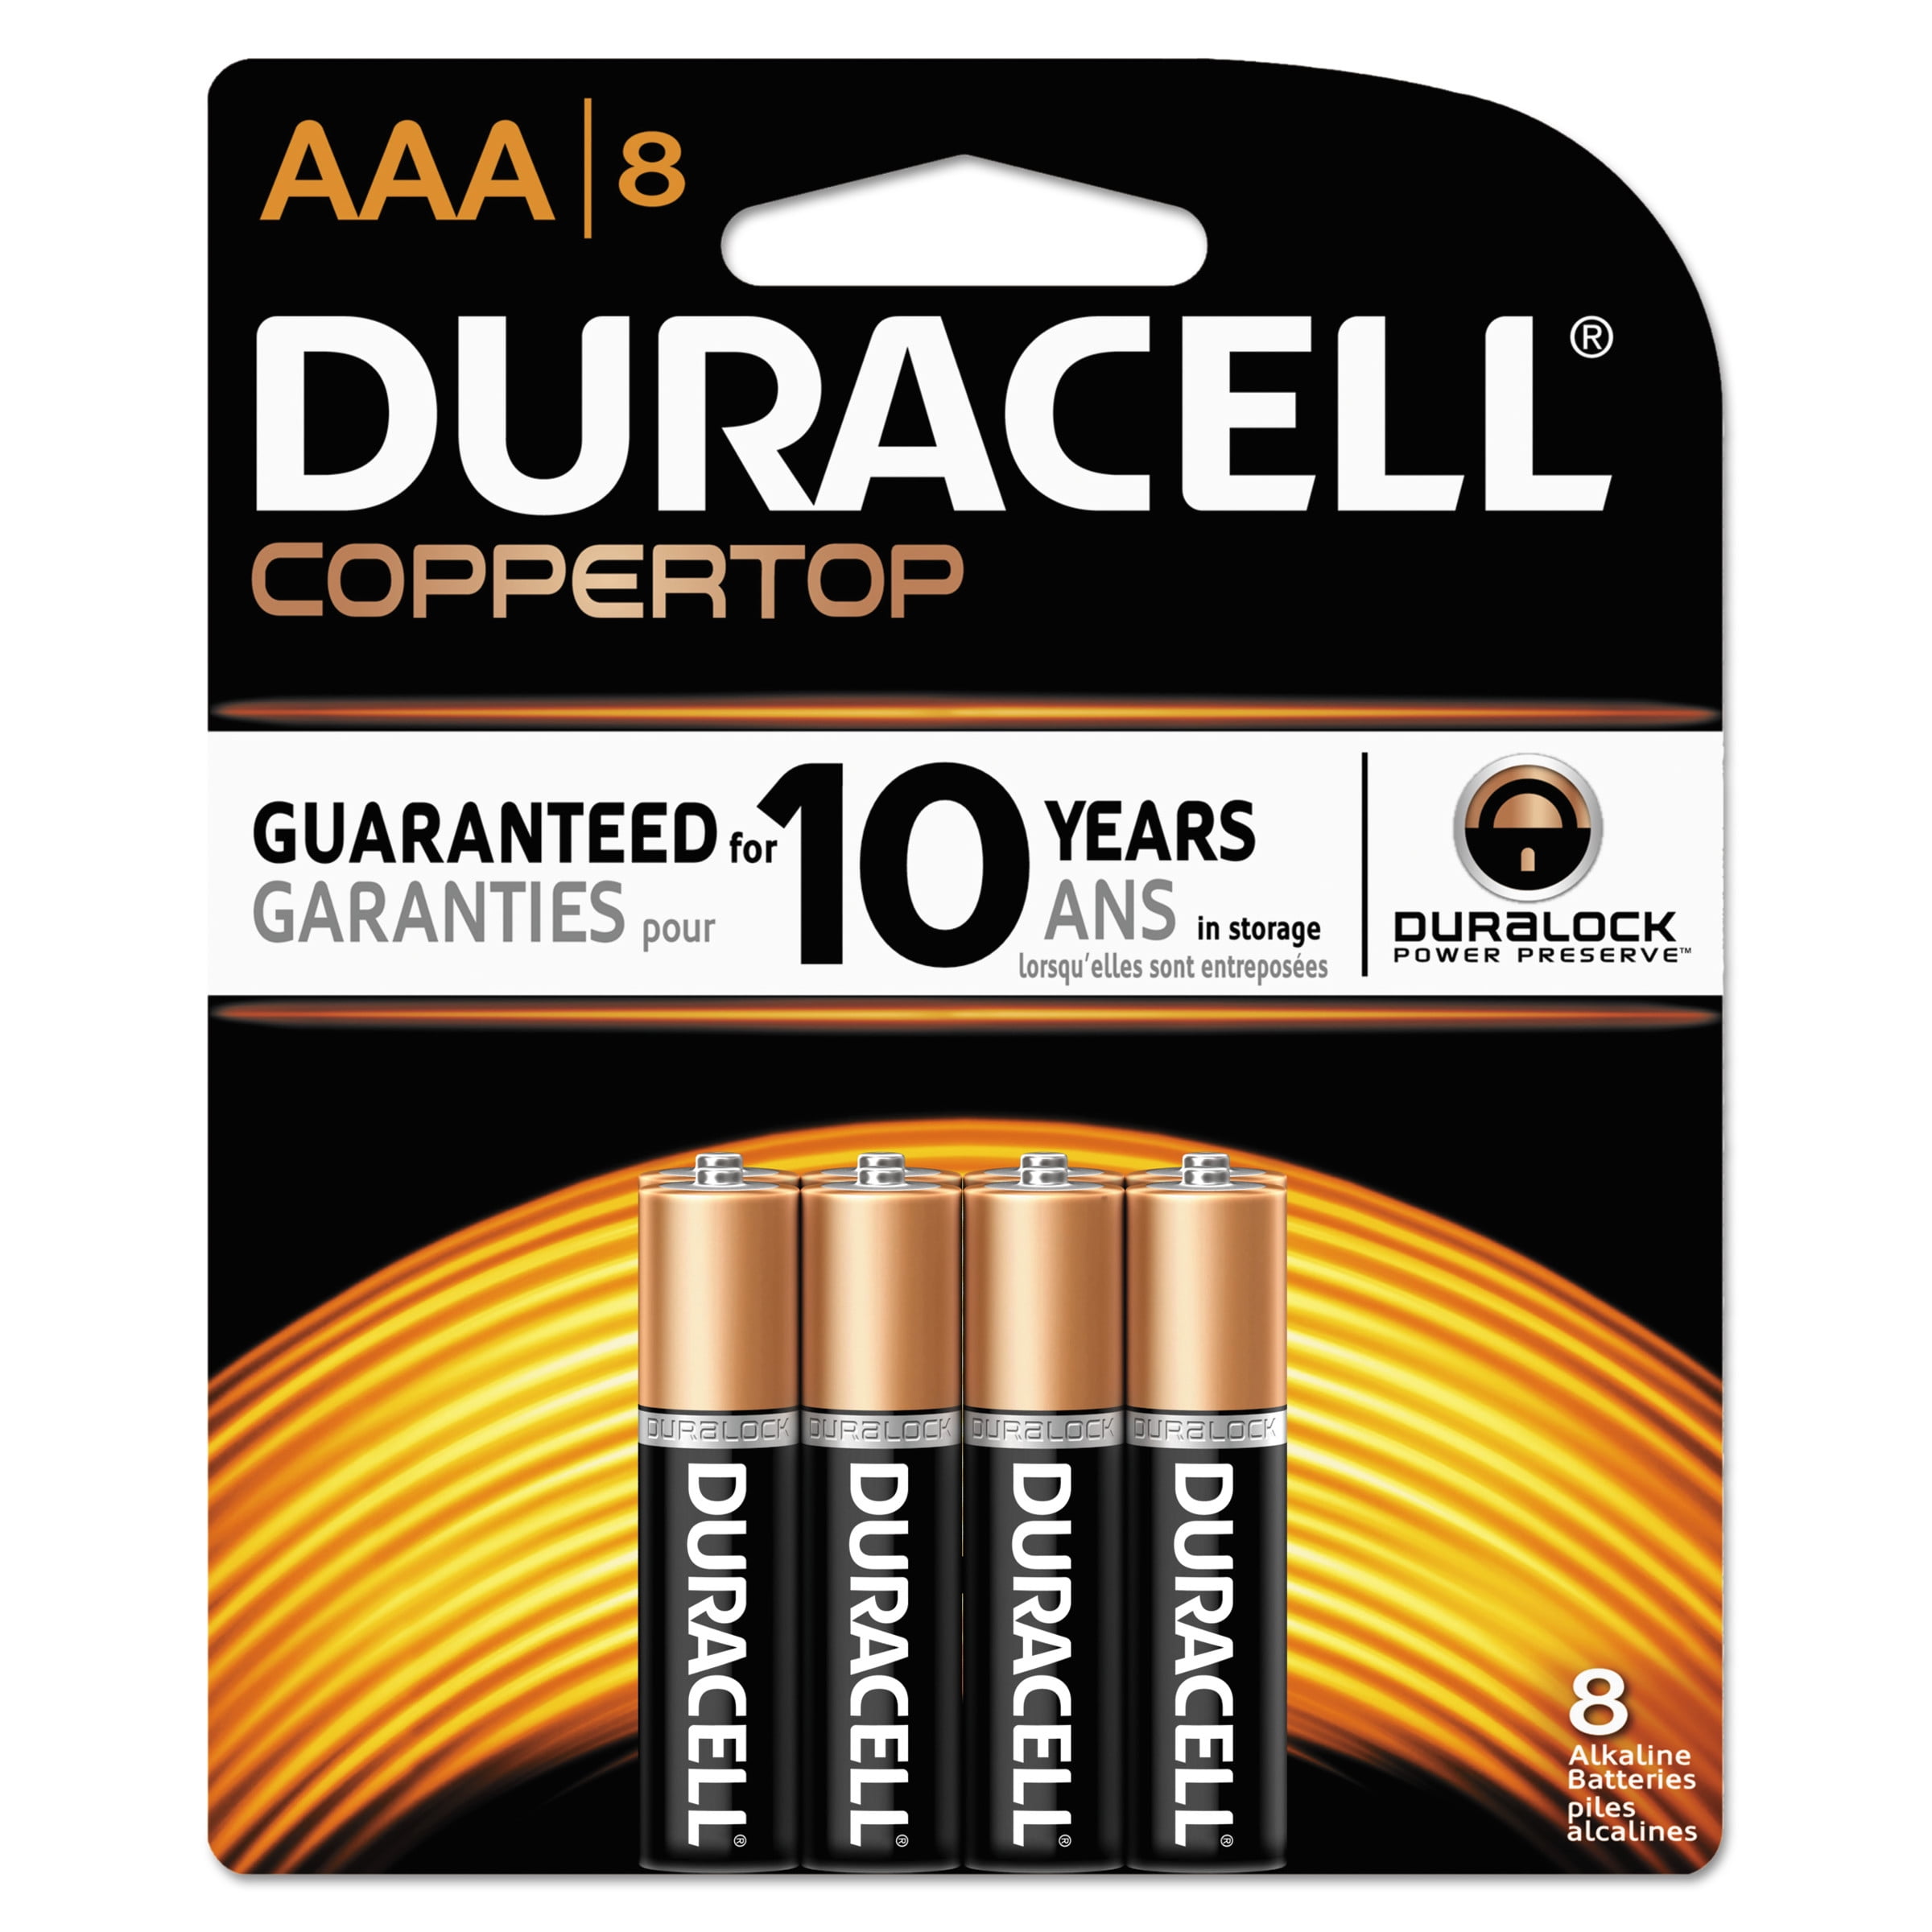 Duracell Coppertop Alkaline AAA batries, 8/Pack, 40 Pack/Carton